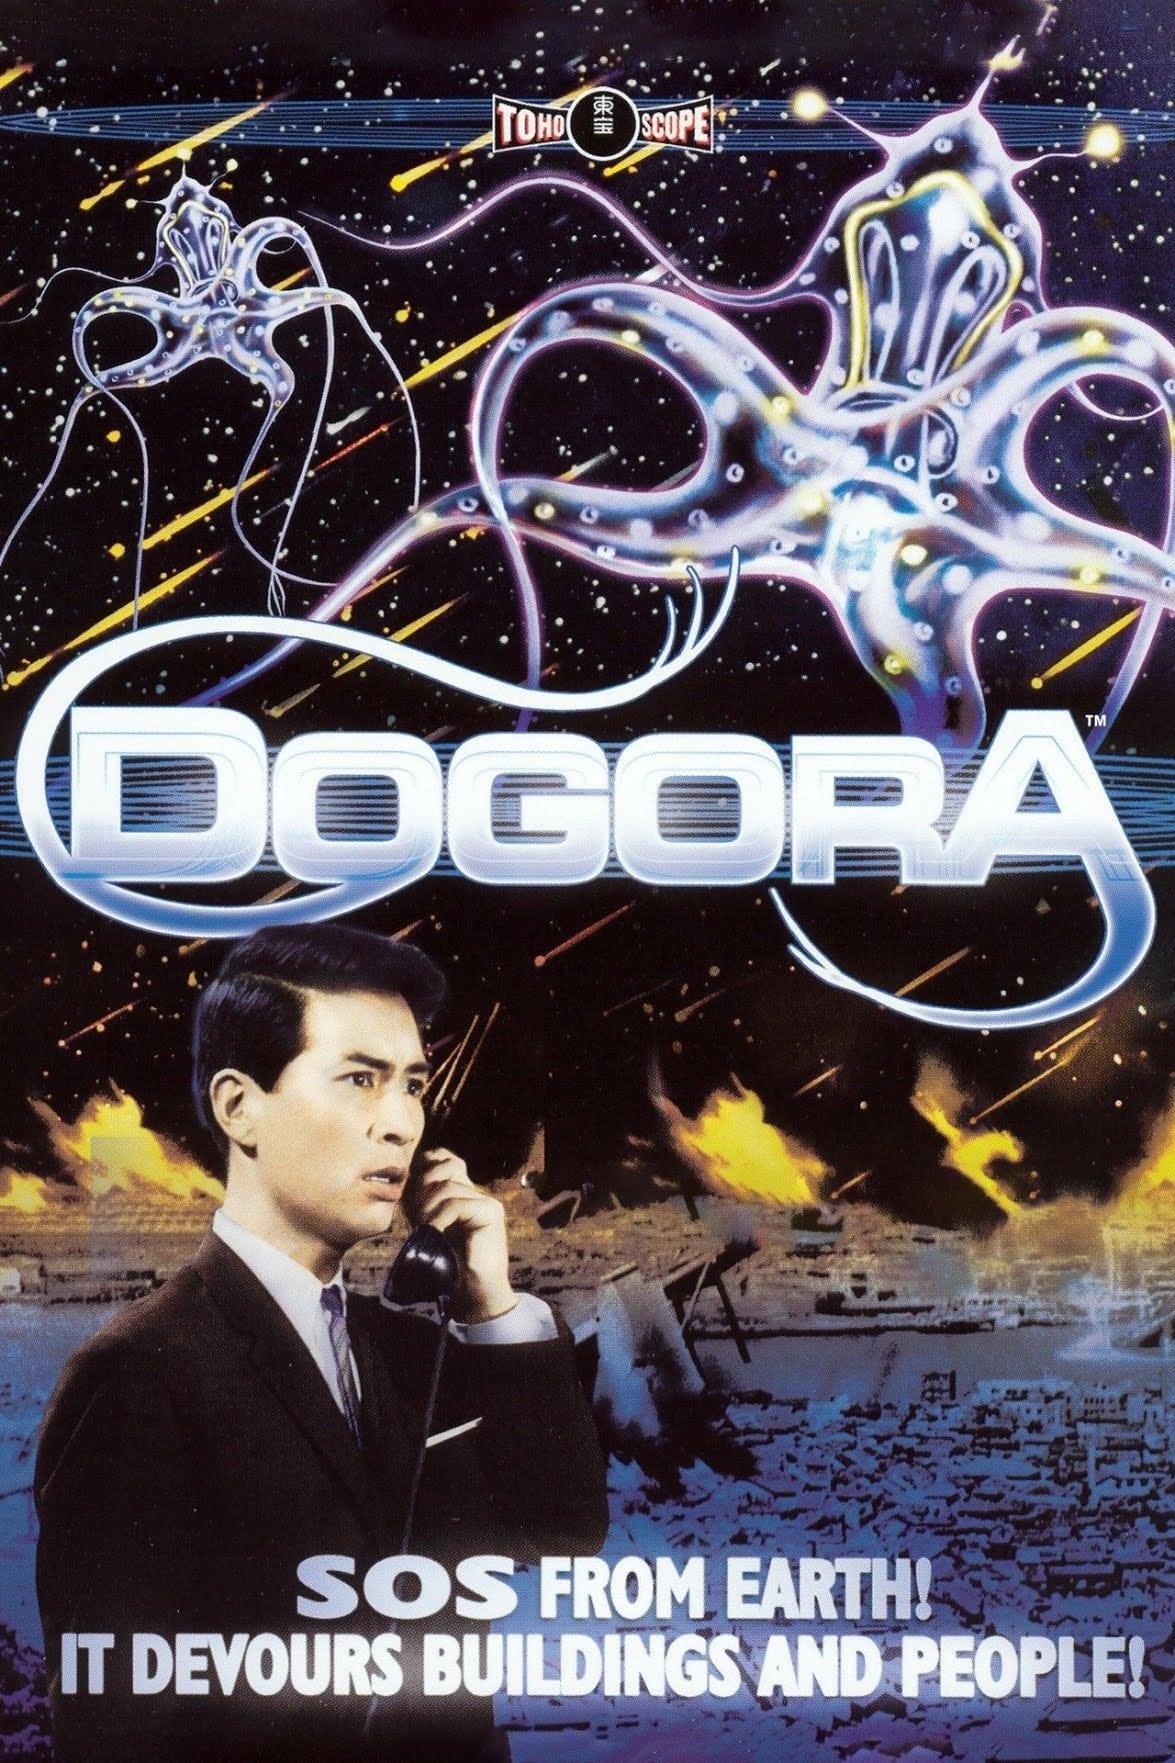 Dogora poster